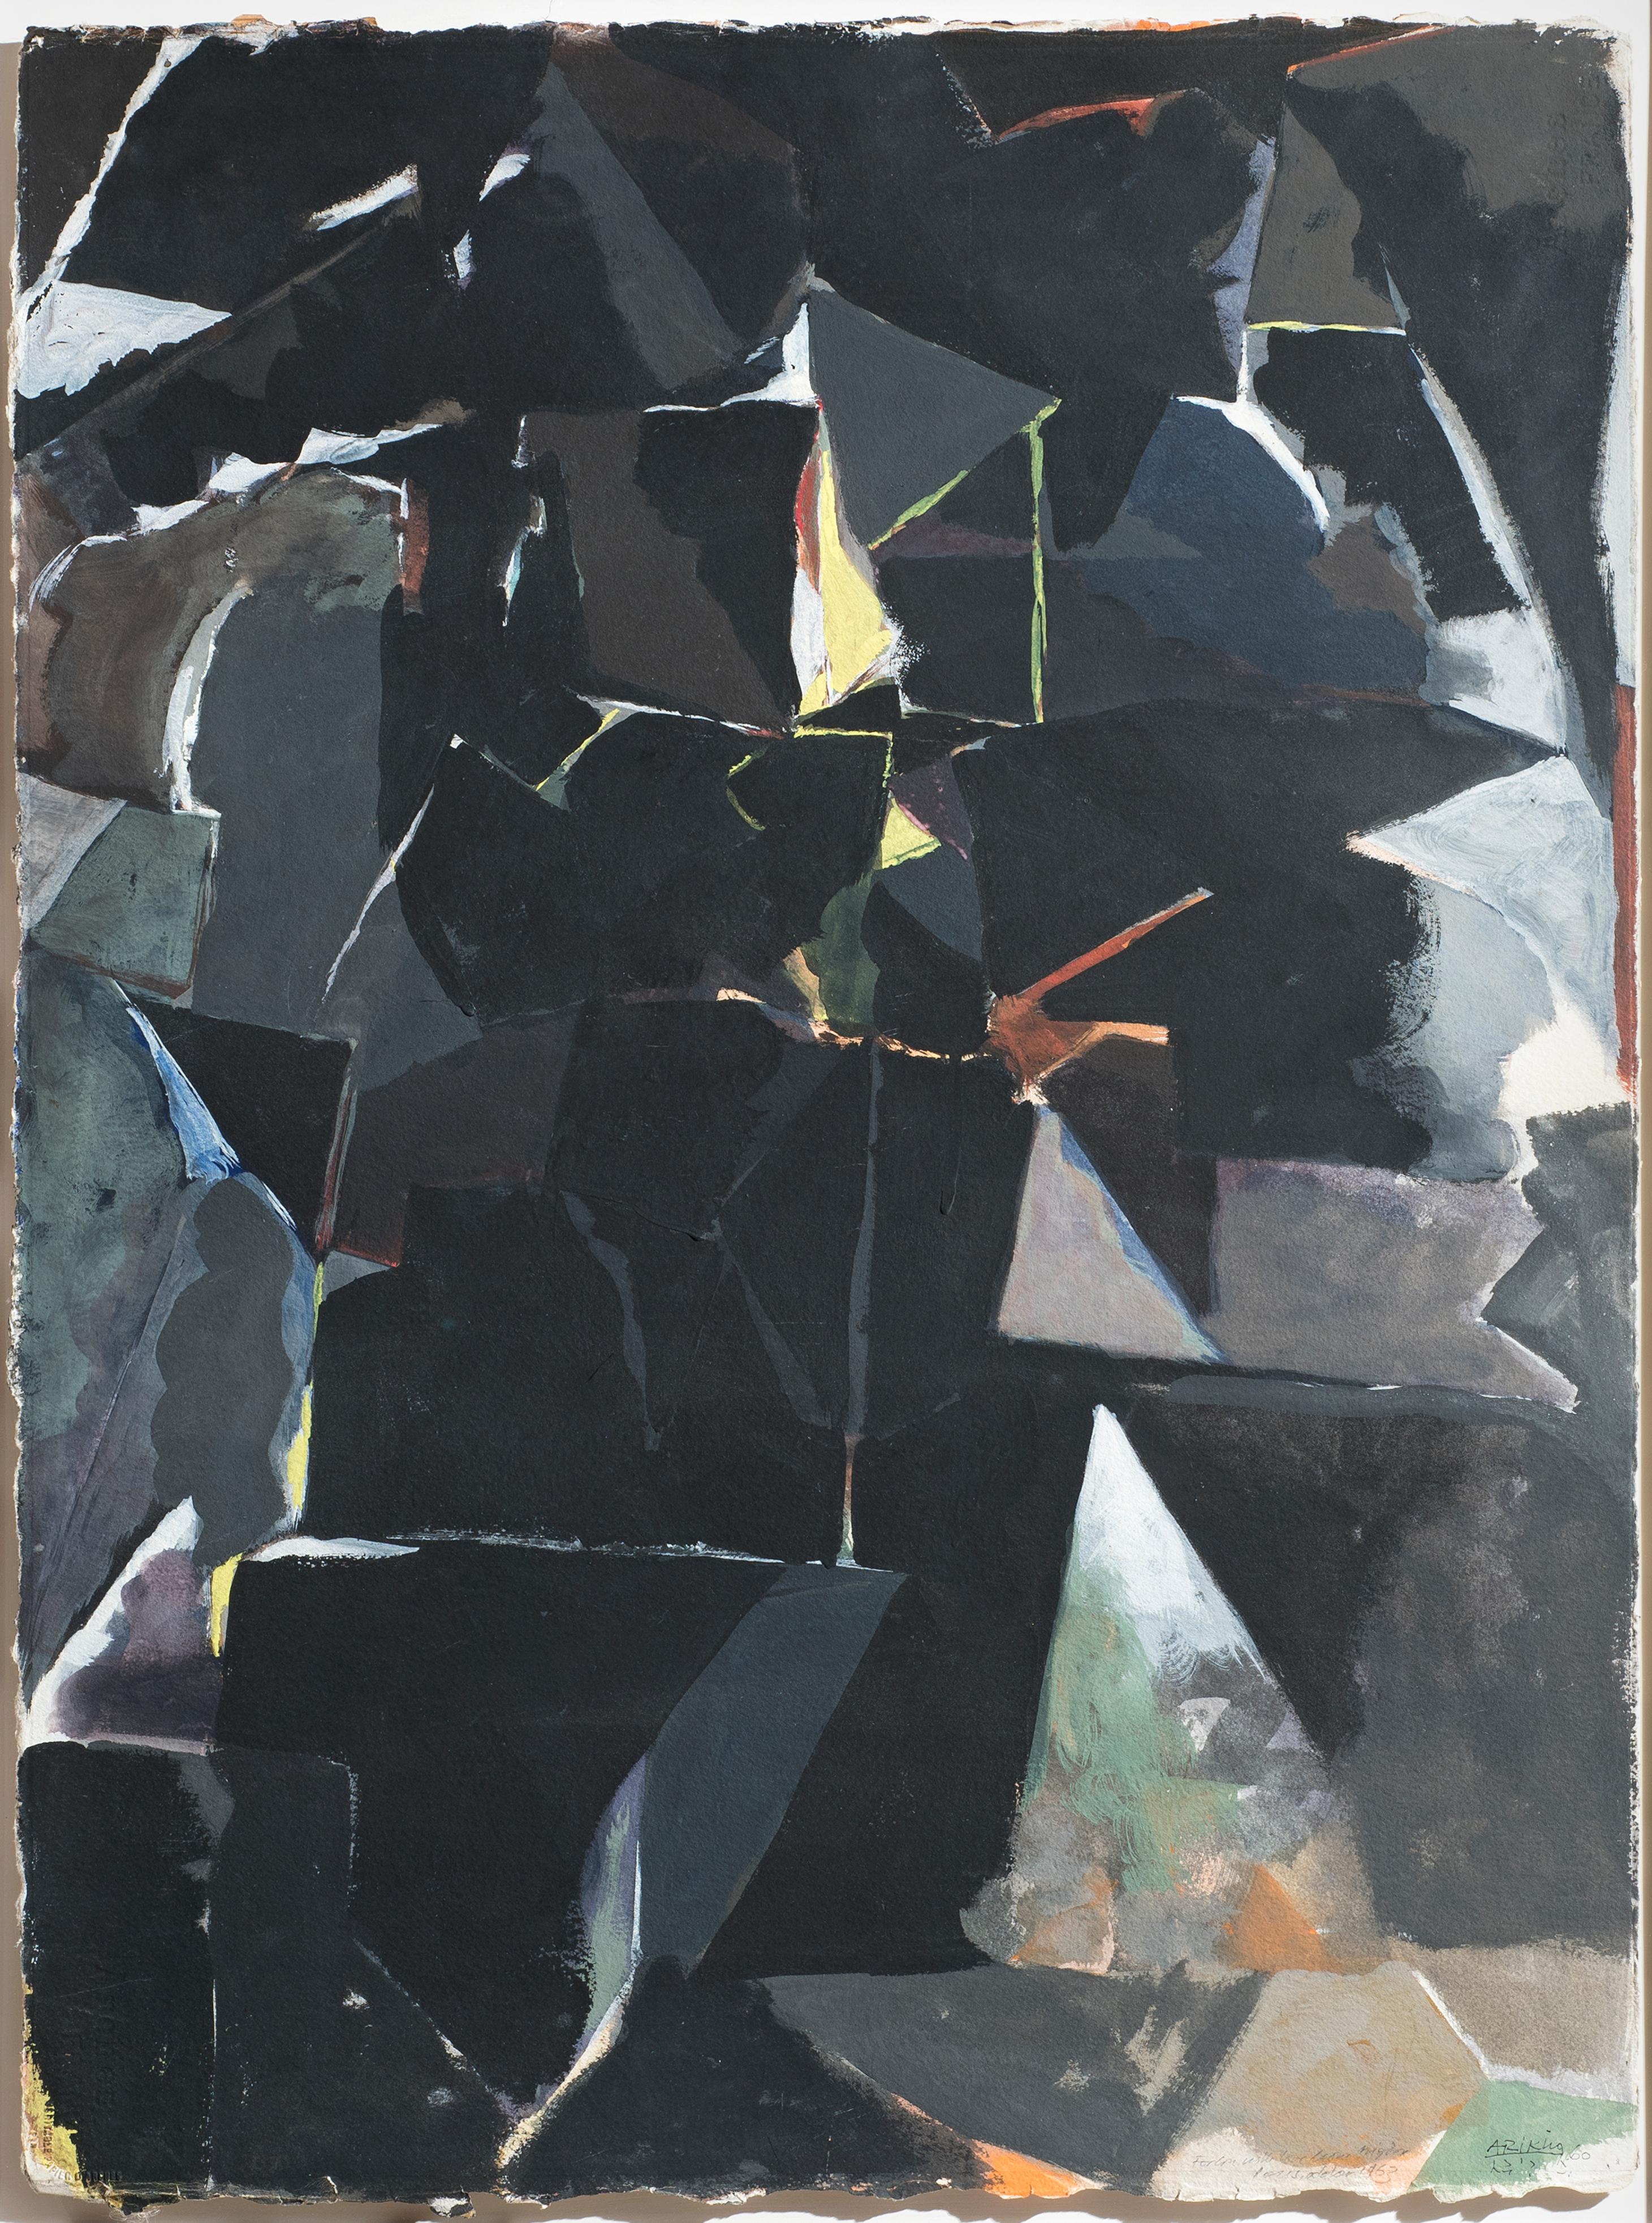 Abstract Painting Avigdor Arikha - composition abstraite en noir